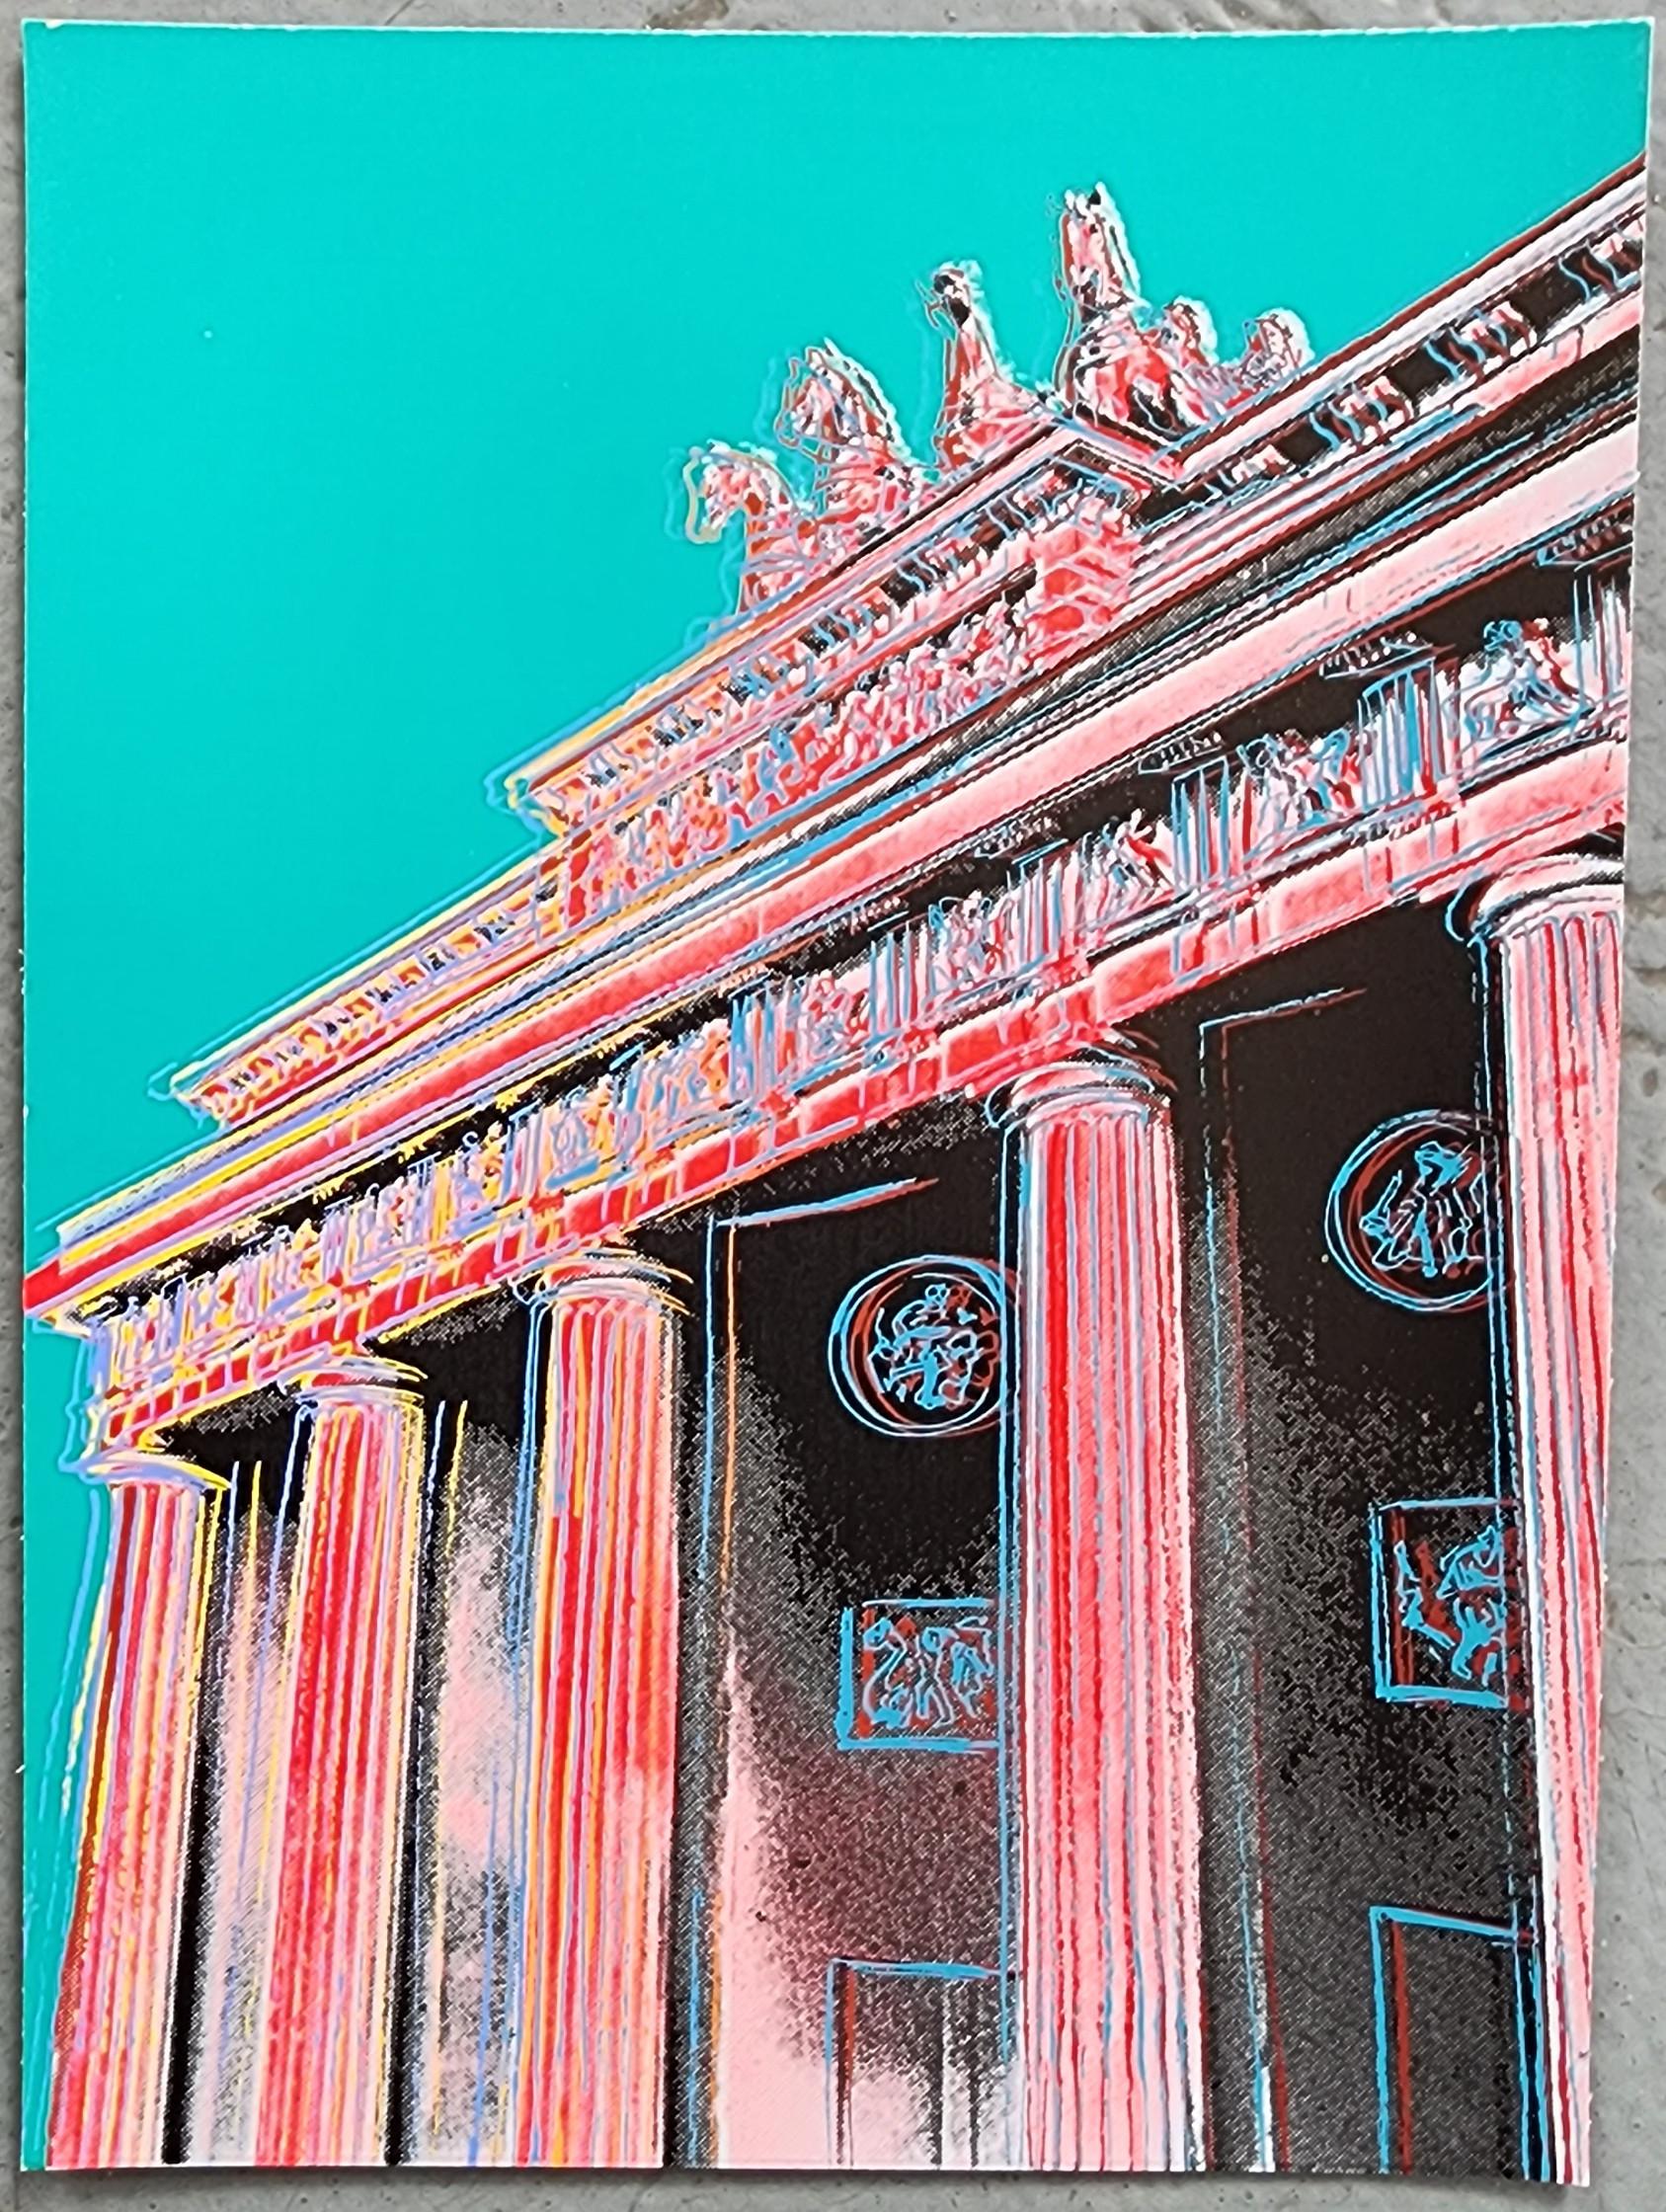 Brandenburg Gate (Red, Teal Hues - Brandenburger Tor) (40% OFF LIST PRICE) - Print by Jurgen Kuhl 